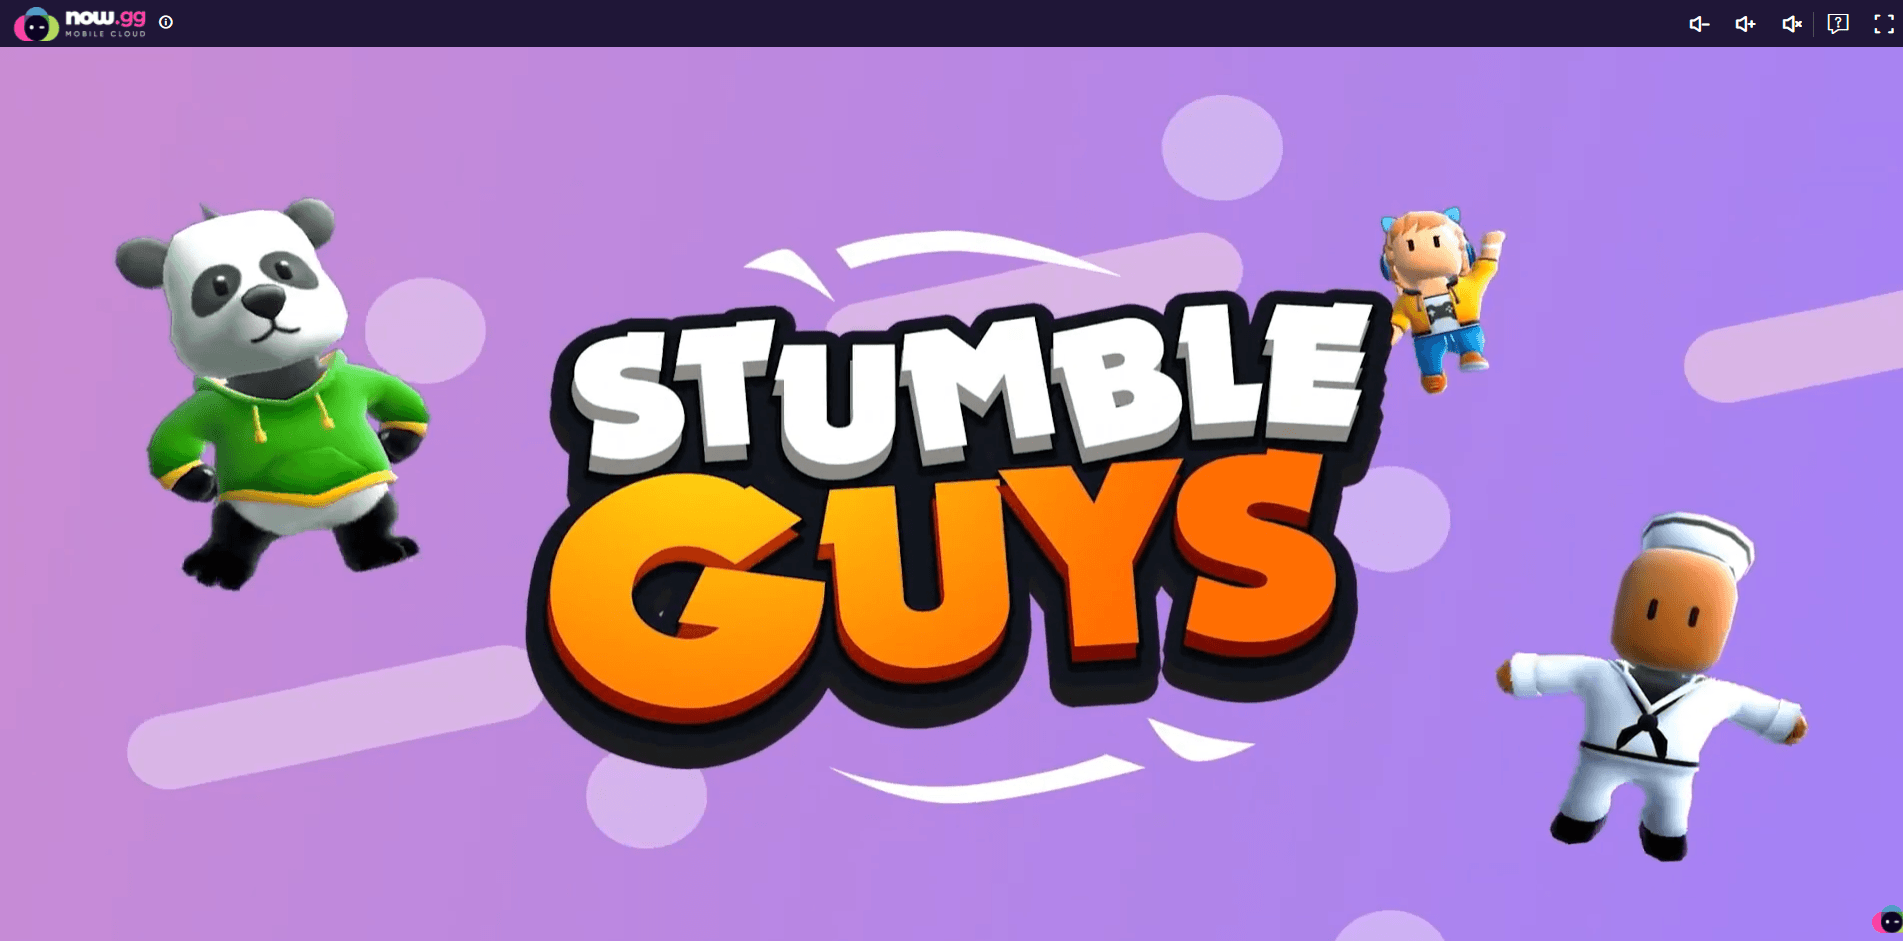 stumble guys now.gg